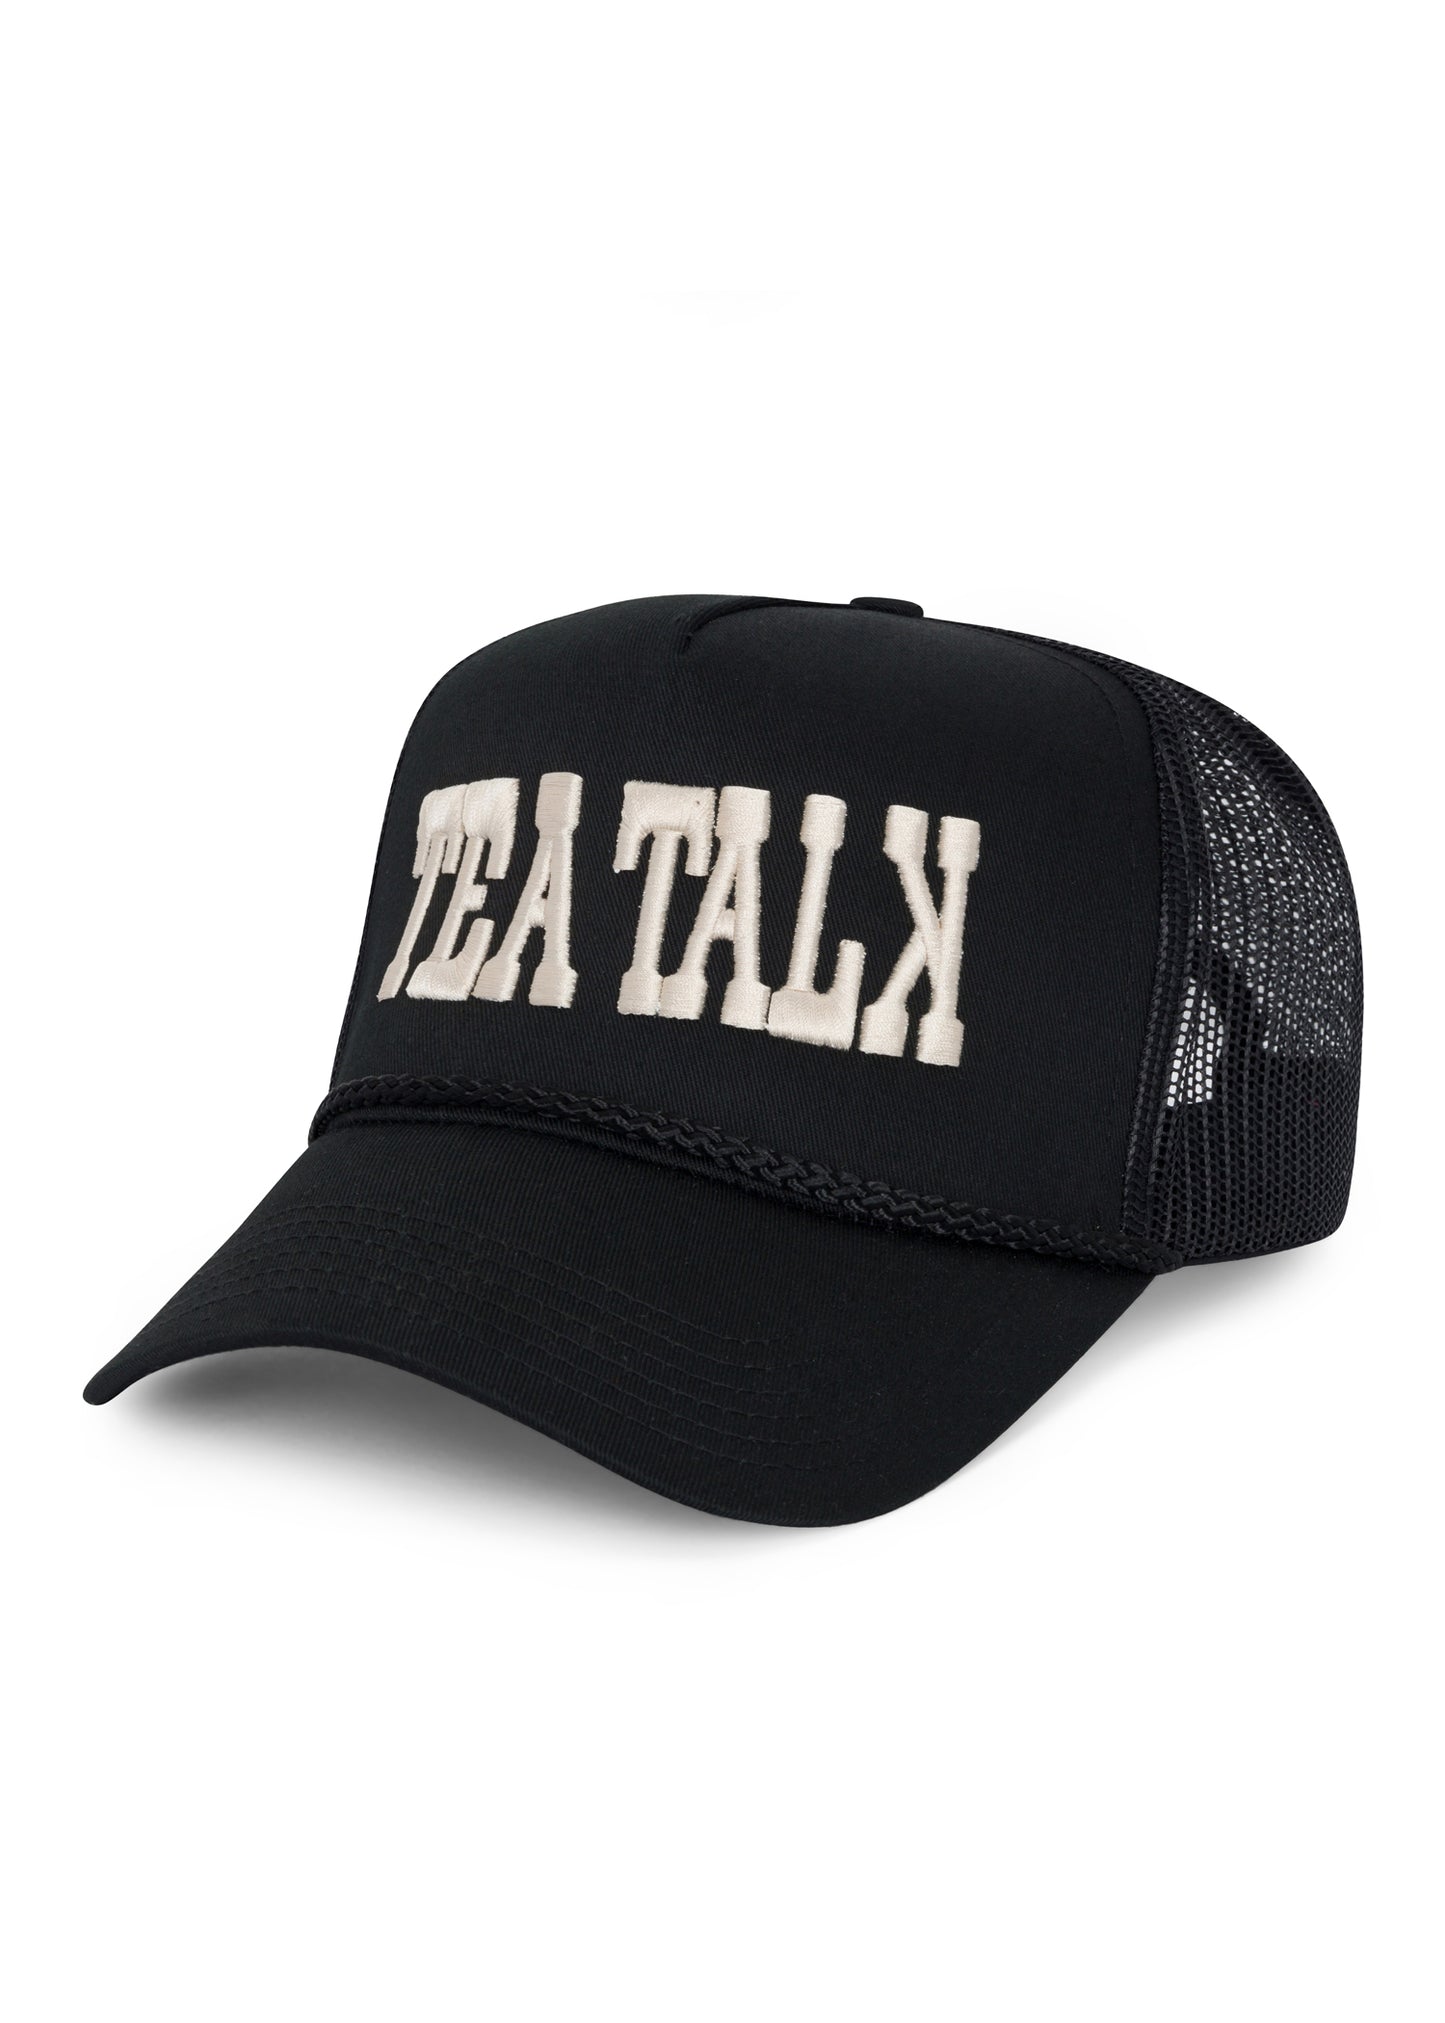 TEA TALK TRUCKER HAT